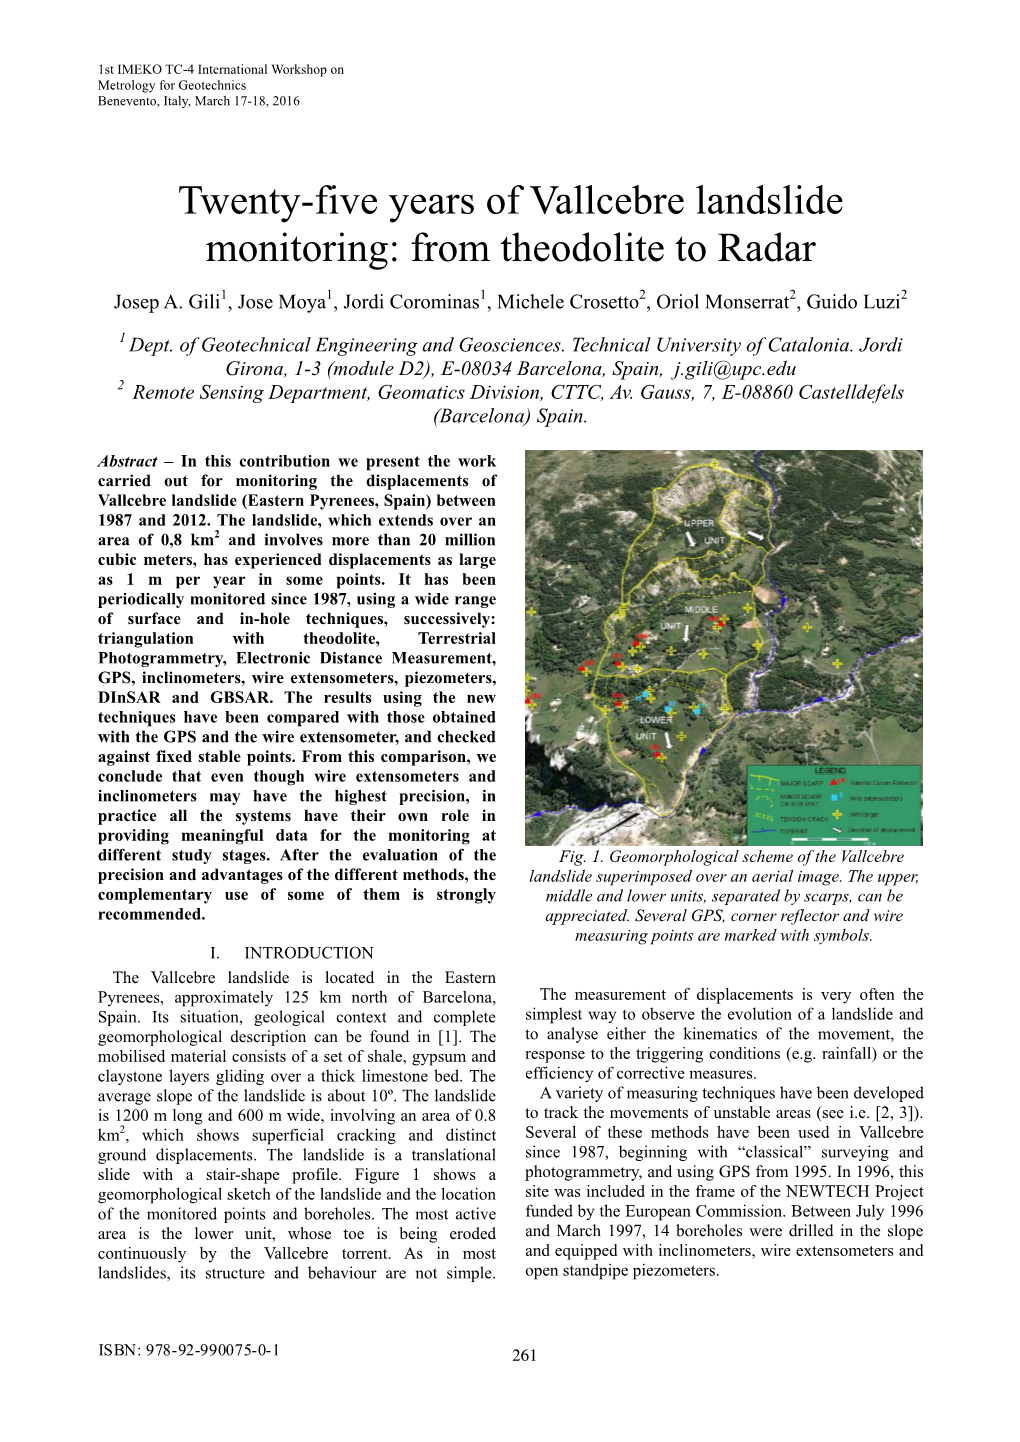 Twenty-Five Years of Vallcebre Landslide Monitoring: from Theodolite to Radar